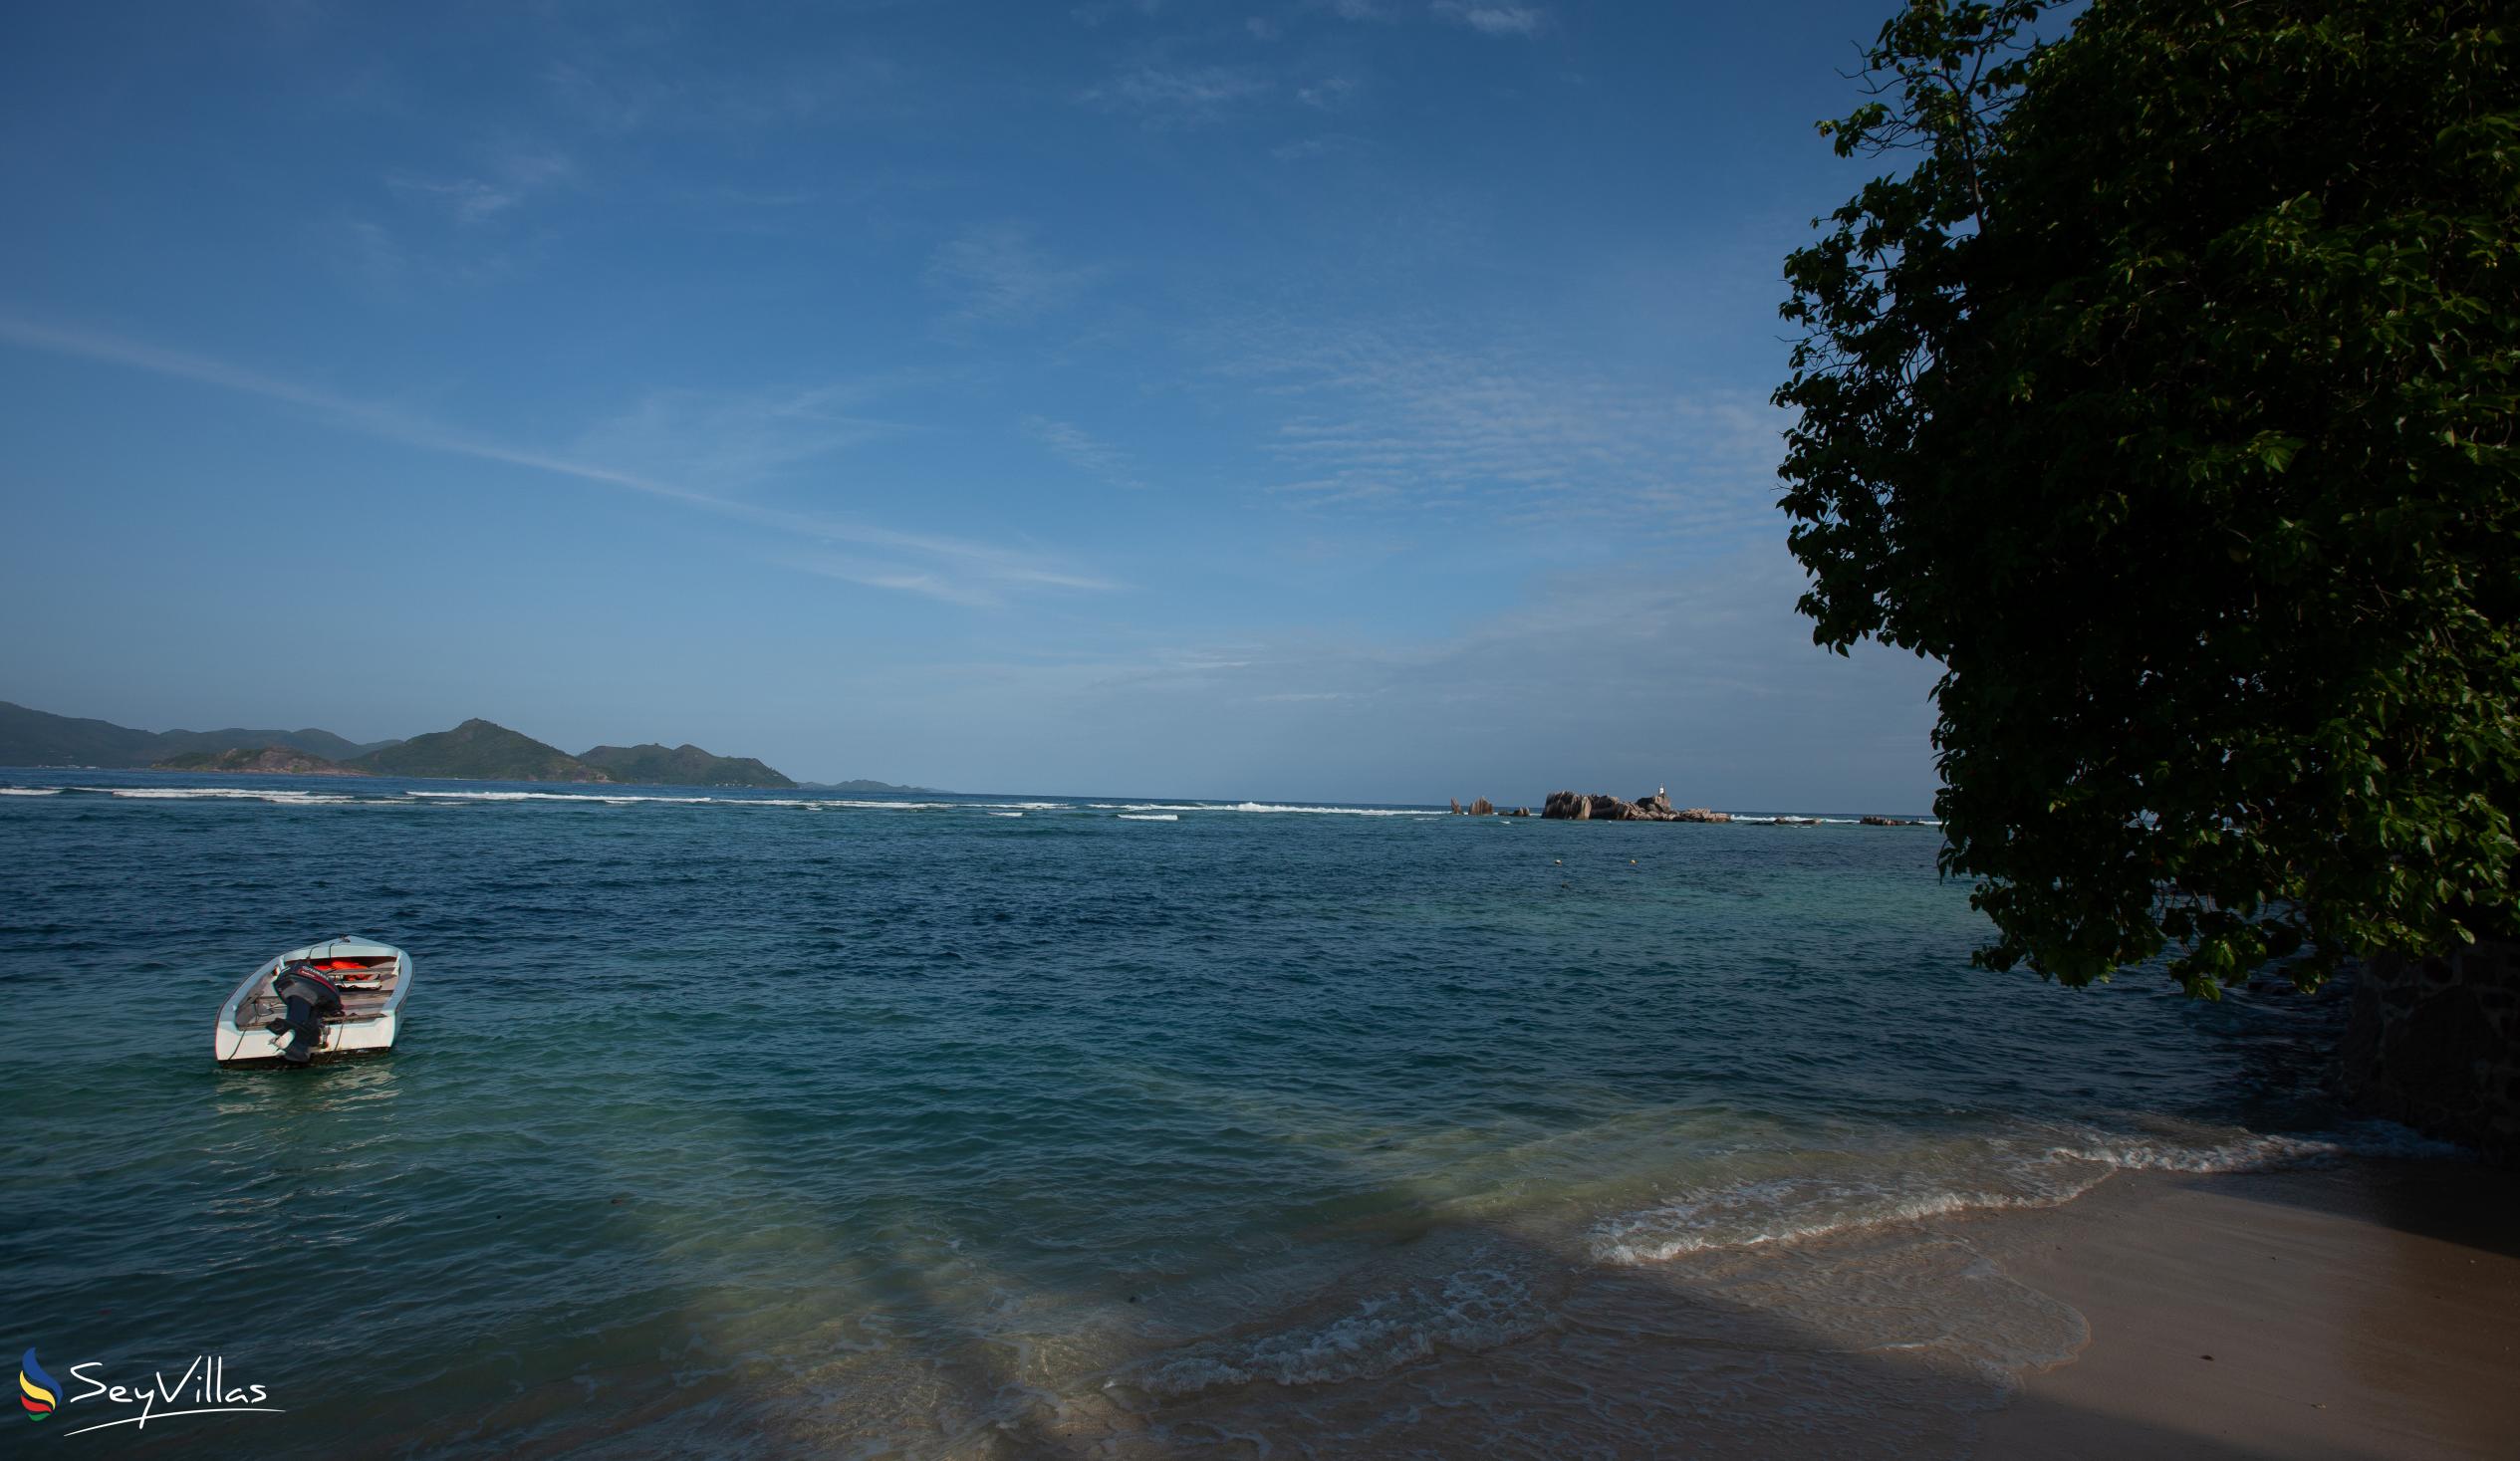 Foto 14: Pension Hibiscus - Posizione - La Digue (Seychelles)